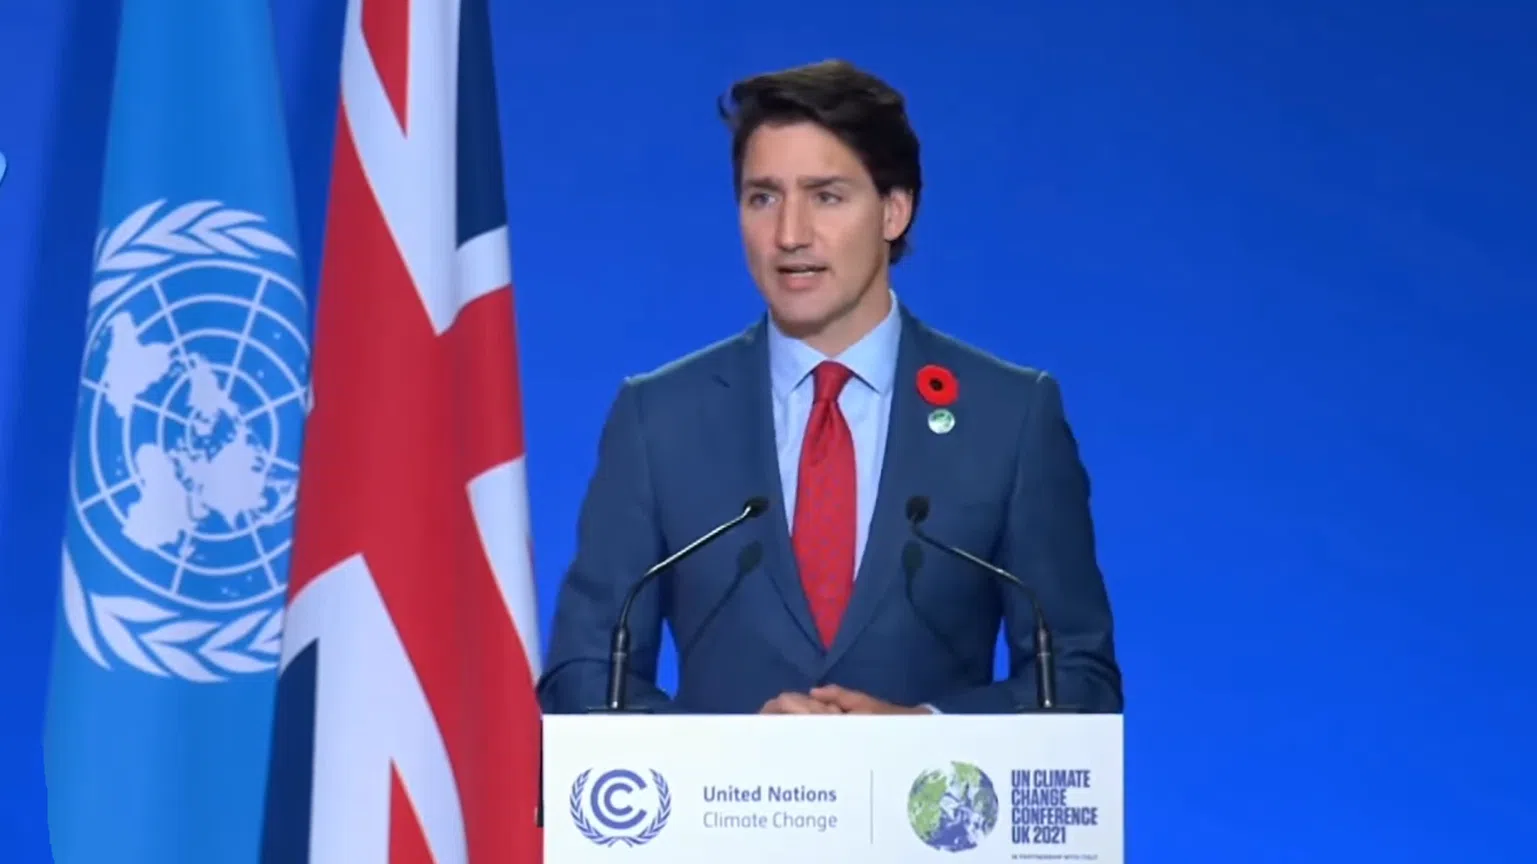 Trudeau pledges to cap Canada’s oil, gas emissions